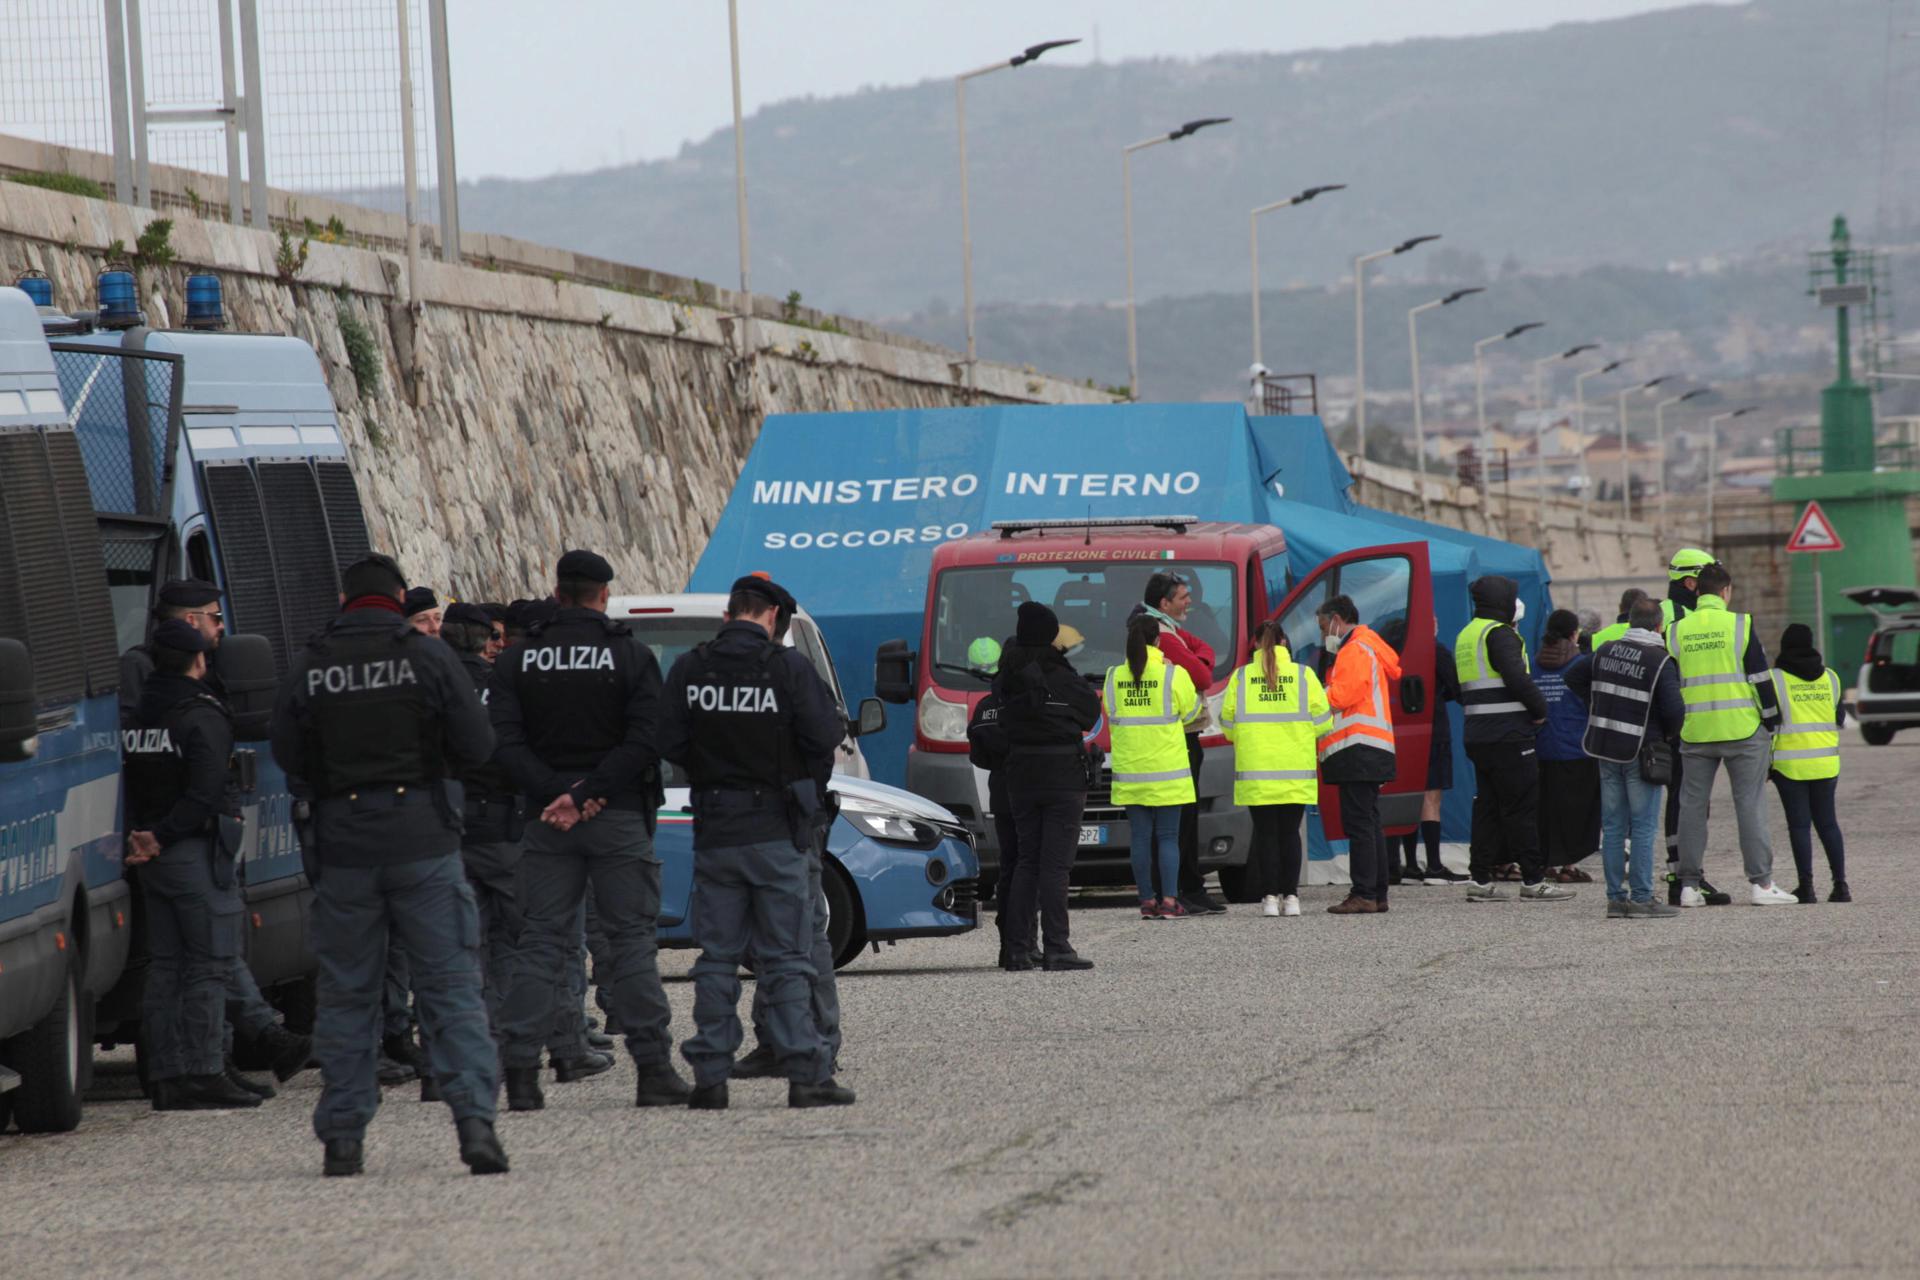 Reggio Calabria, Italy. Italian police attend to illegal migrants rescued in the Mediterranean Sea on March 11, 2023. EFE/EPA/MARCO COSTANTINO